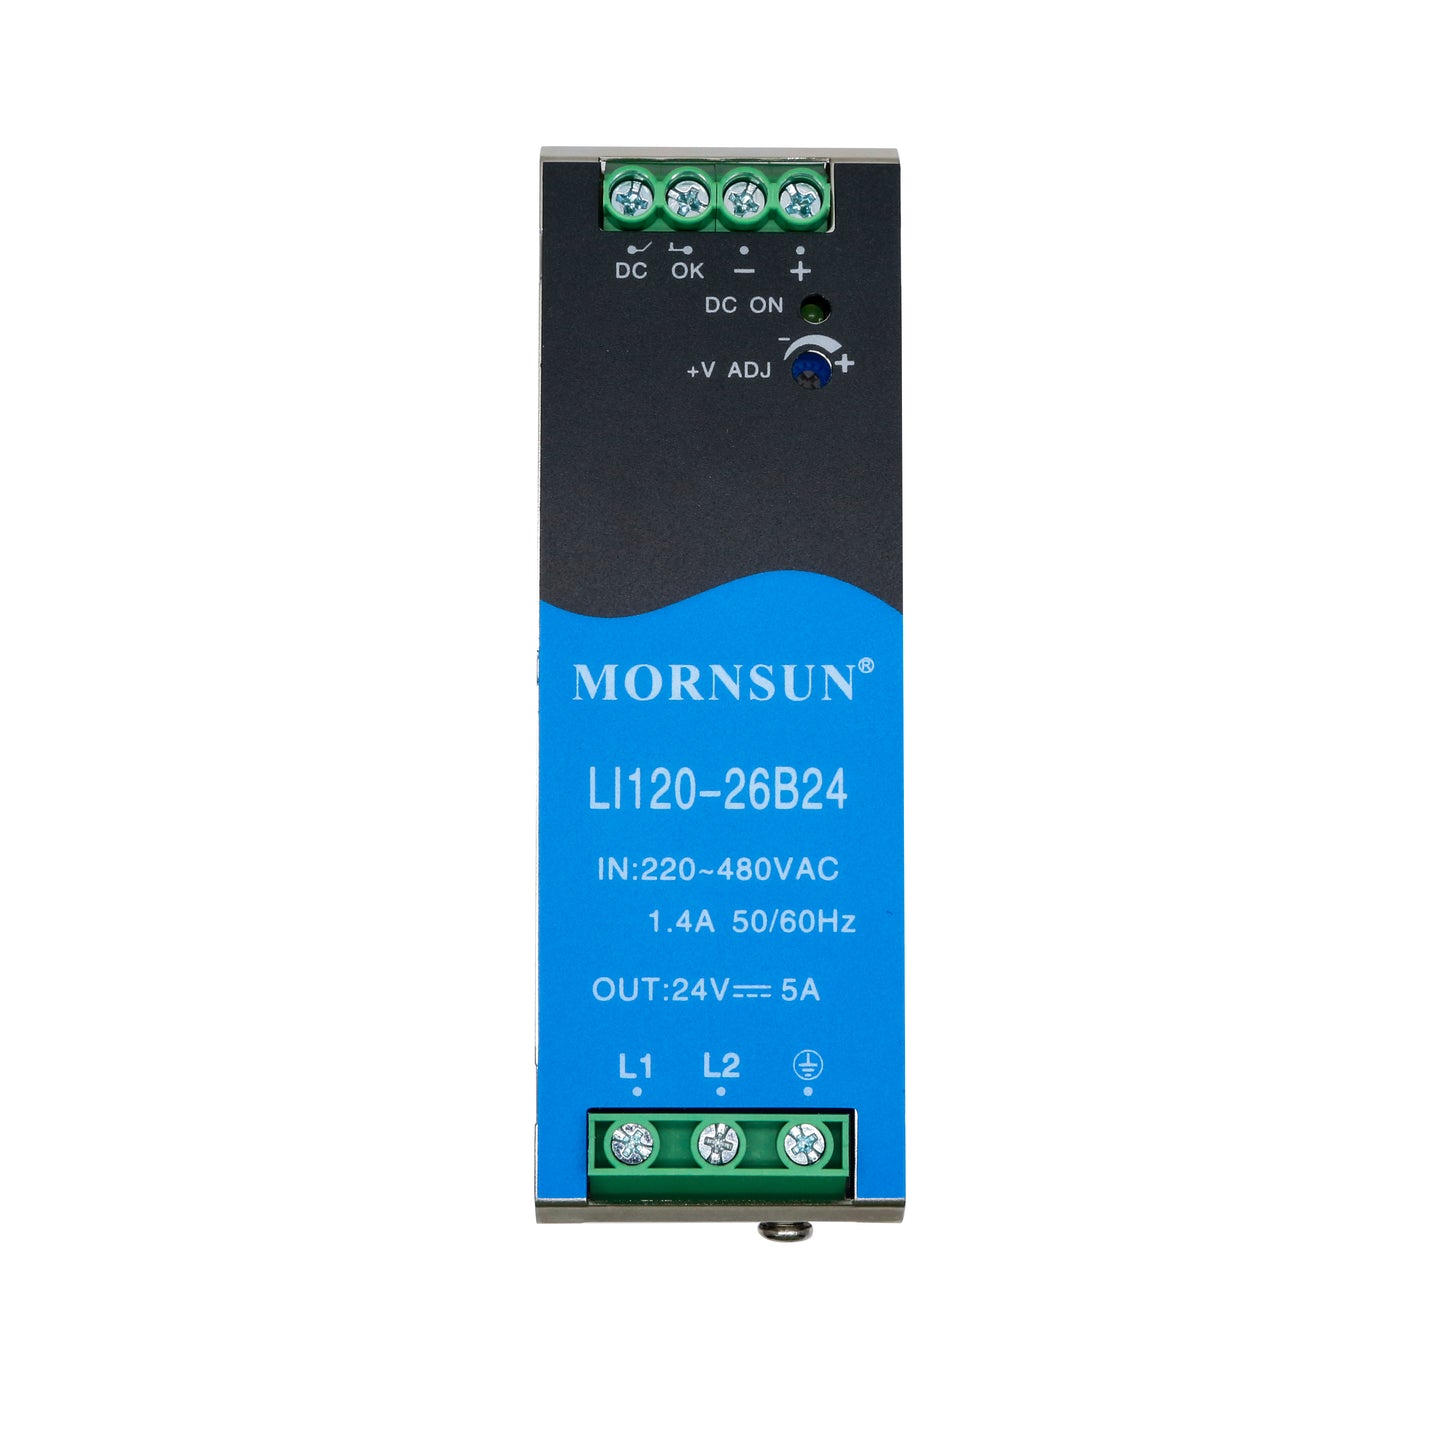 Mornsun LI120-23B48R3 DIN-Rail Power Supply 48VDC 2.5A 120W